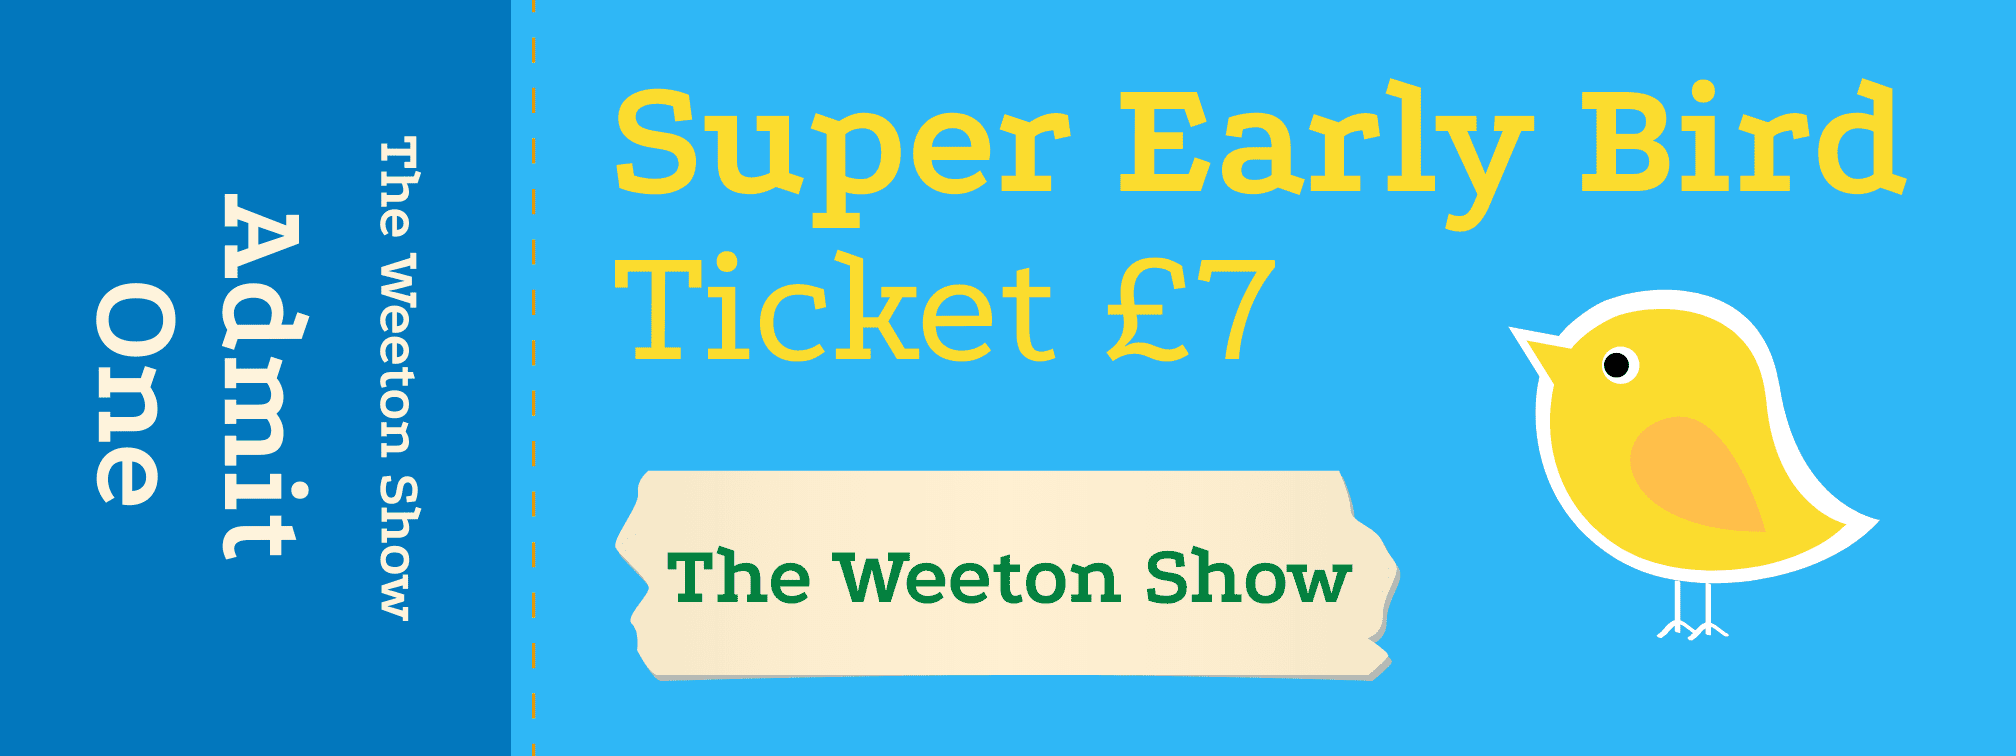 Weeton Show Super Early Bird Ticket